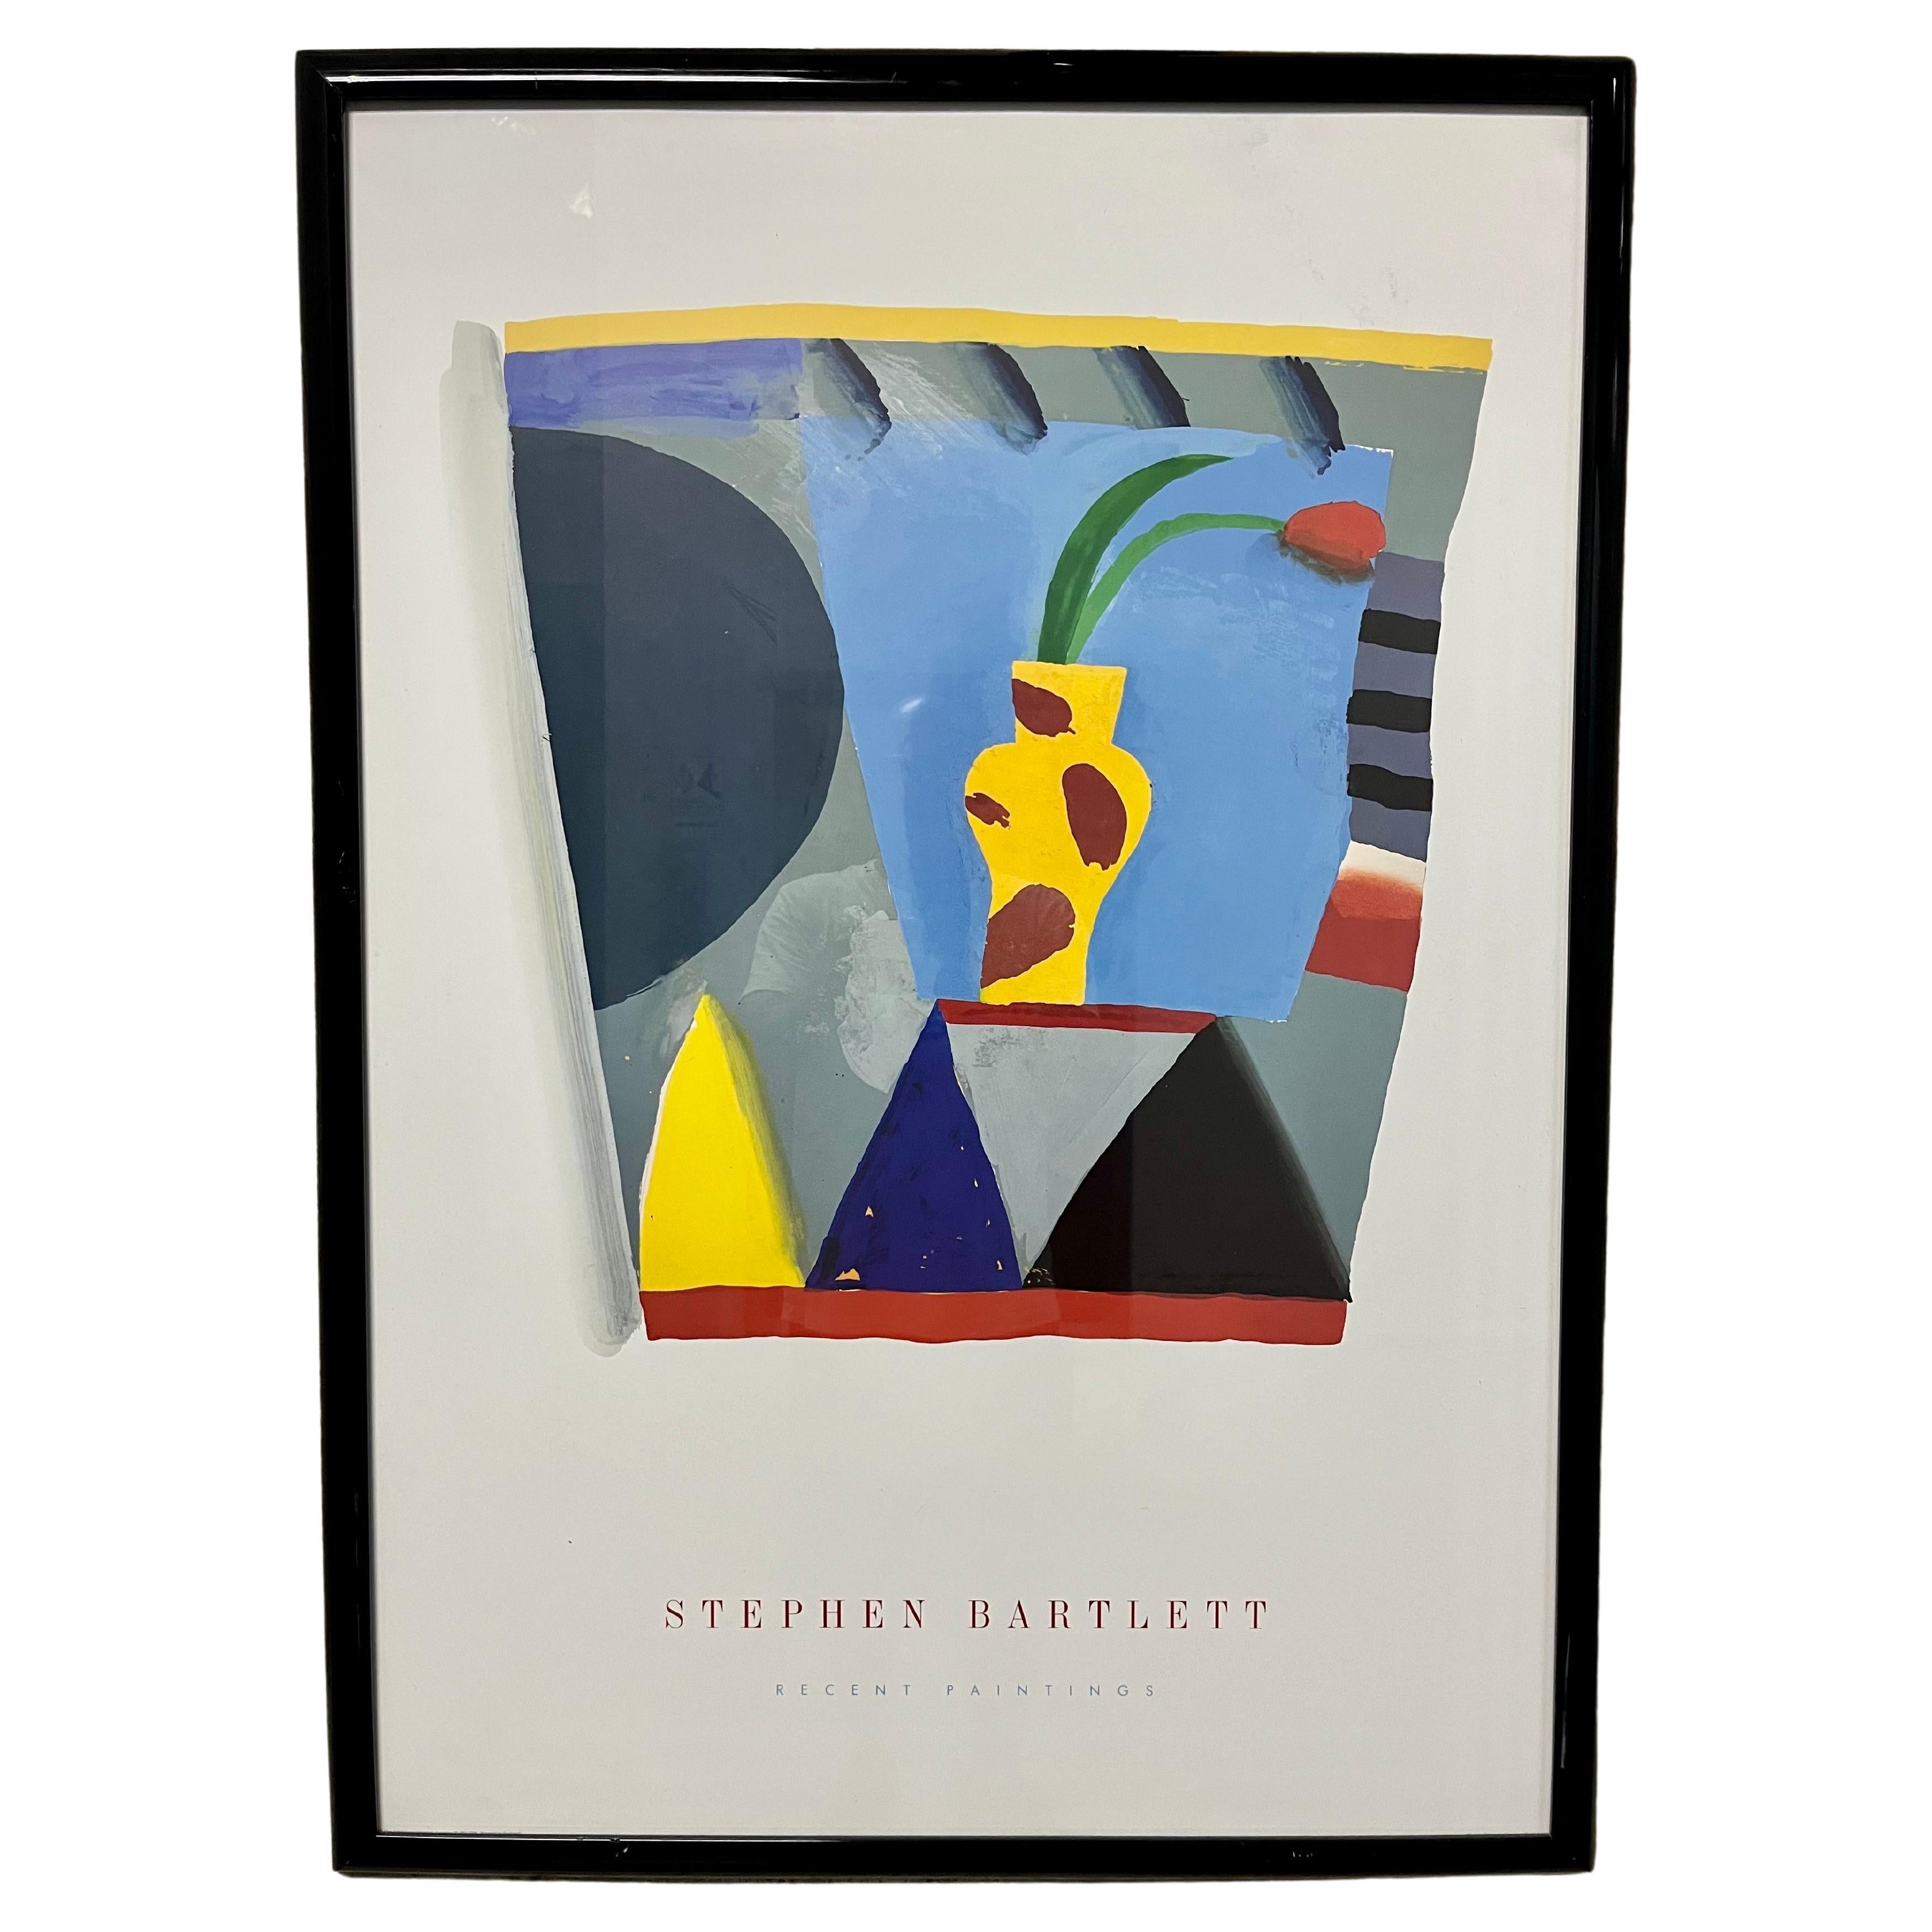 Stephen Bartlett, Recent Paintings, Framed Exhibition Poster. Circa 1980s